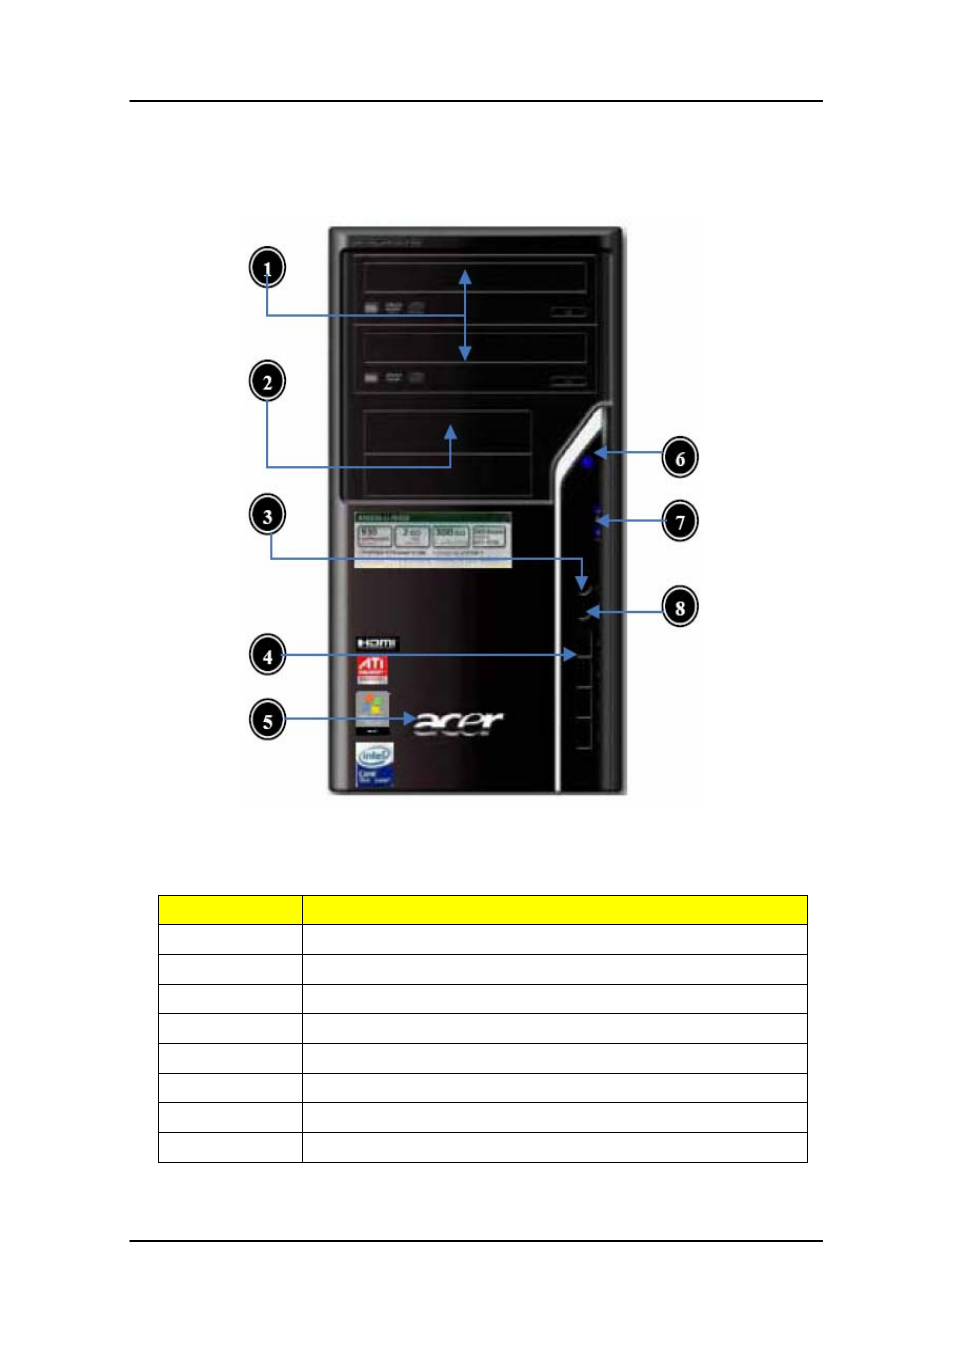 Aspire m1640 front panel, Label description | Acer Aspire M5640 User Manual  | Page 19 / 89